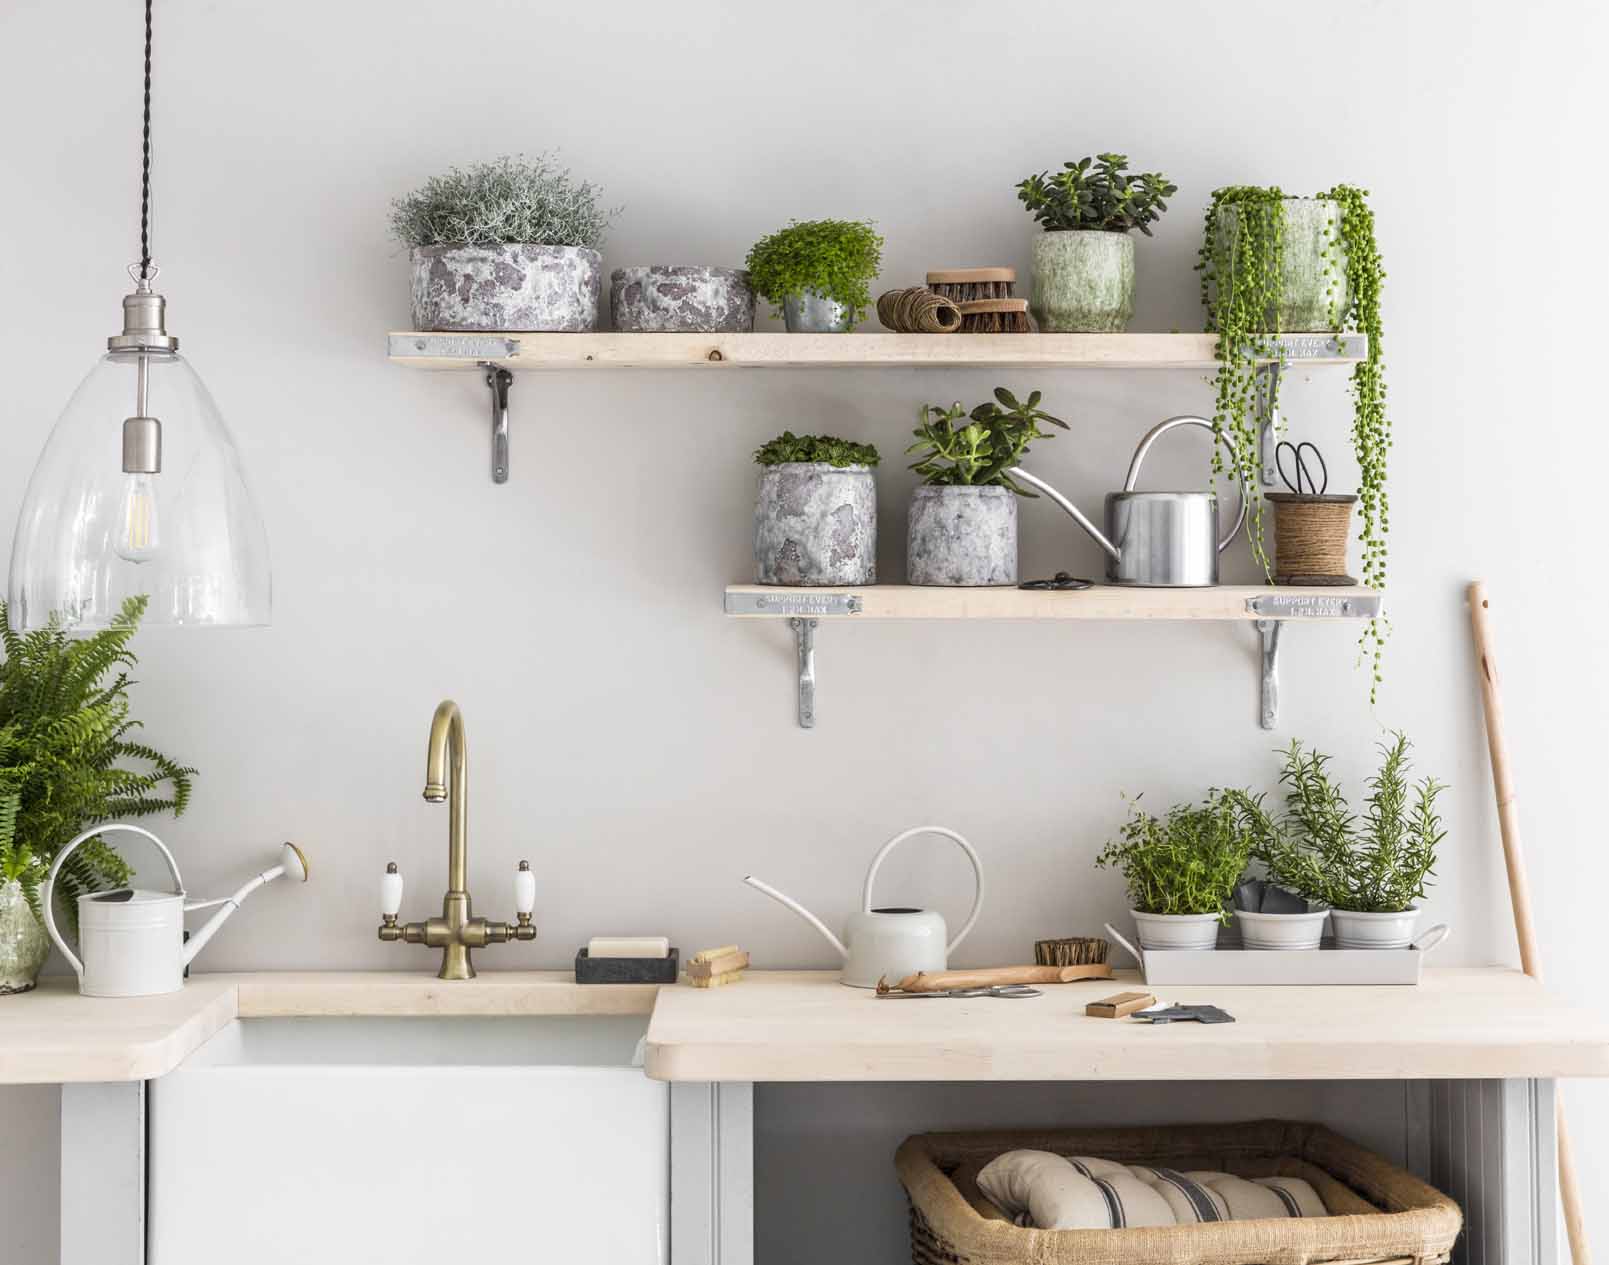 Adding plants.. 80+ Unusual Kitchen Design Ideas for Small Spaces - 15